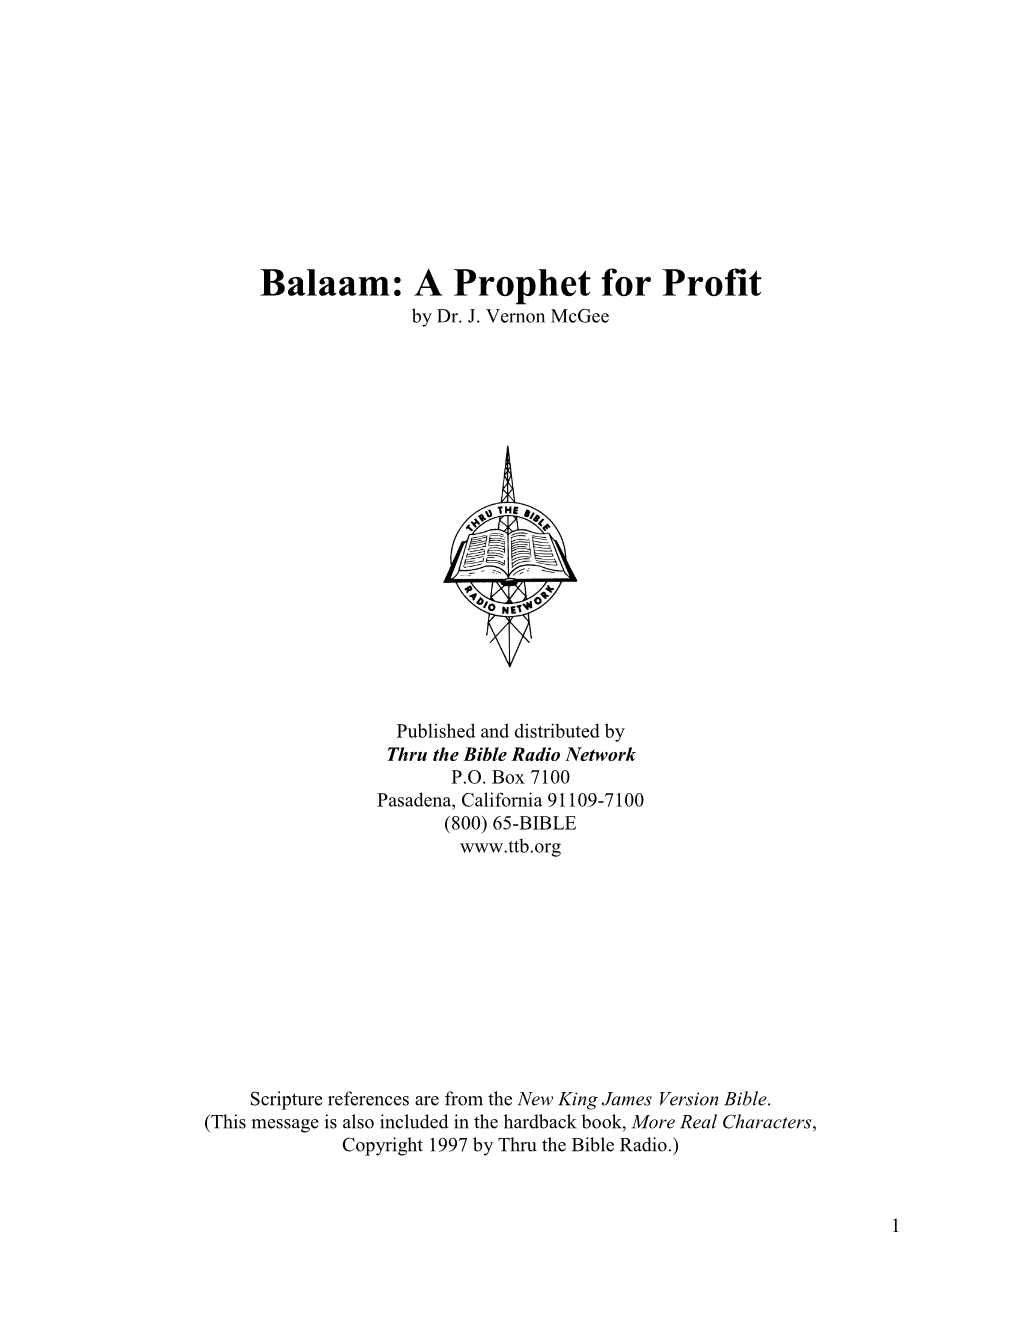 Balaam: a Prophet for Profit by Dr